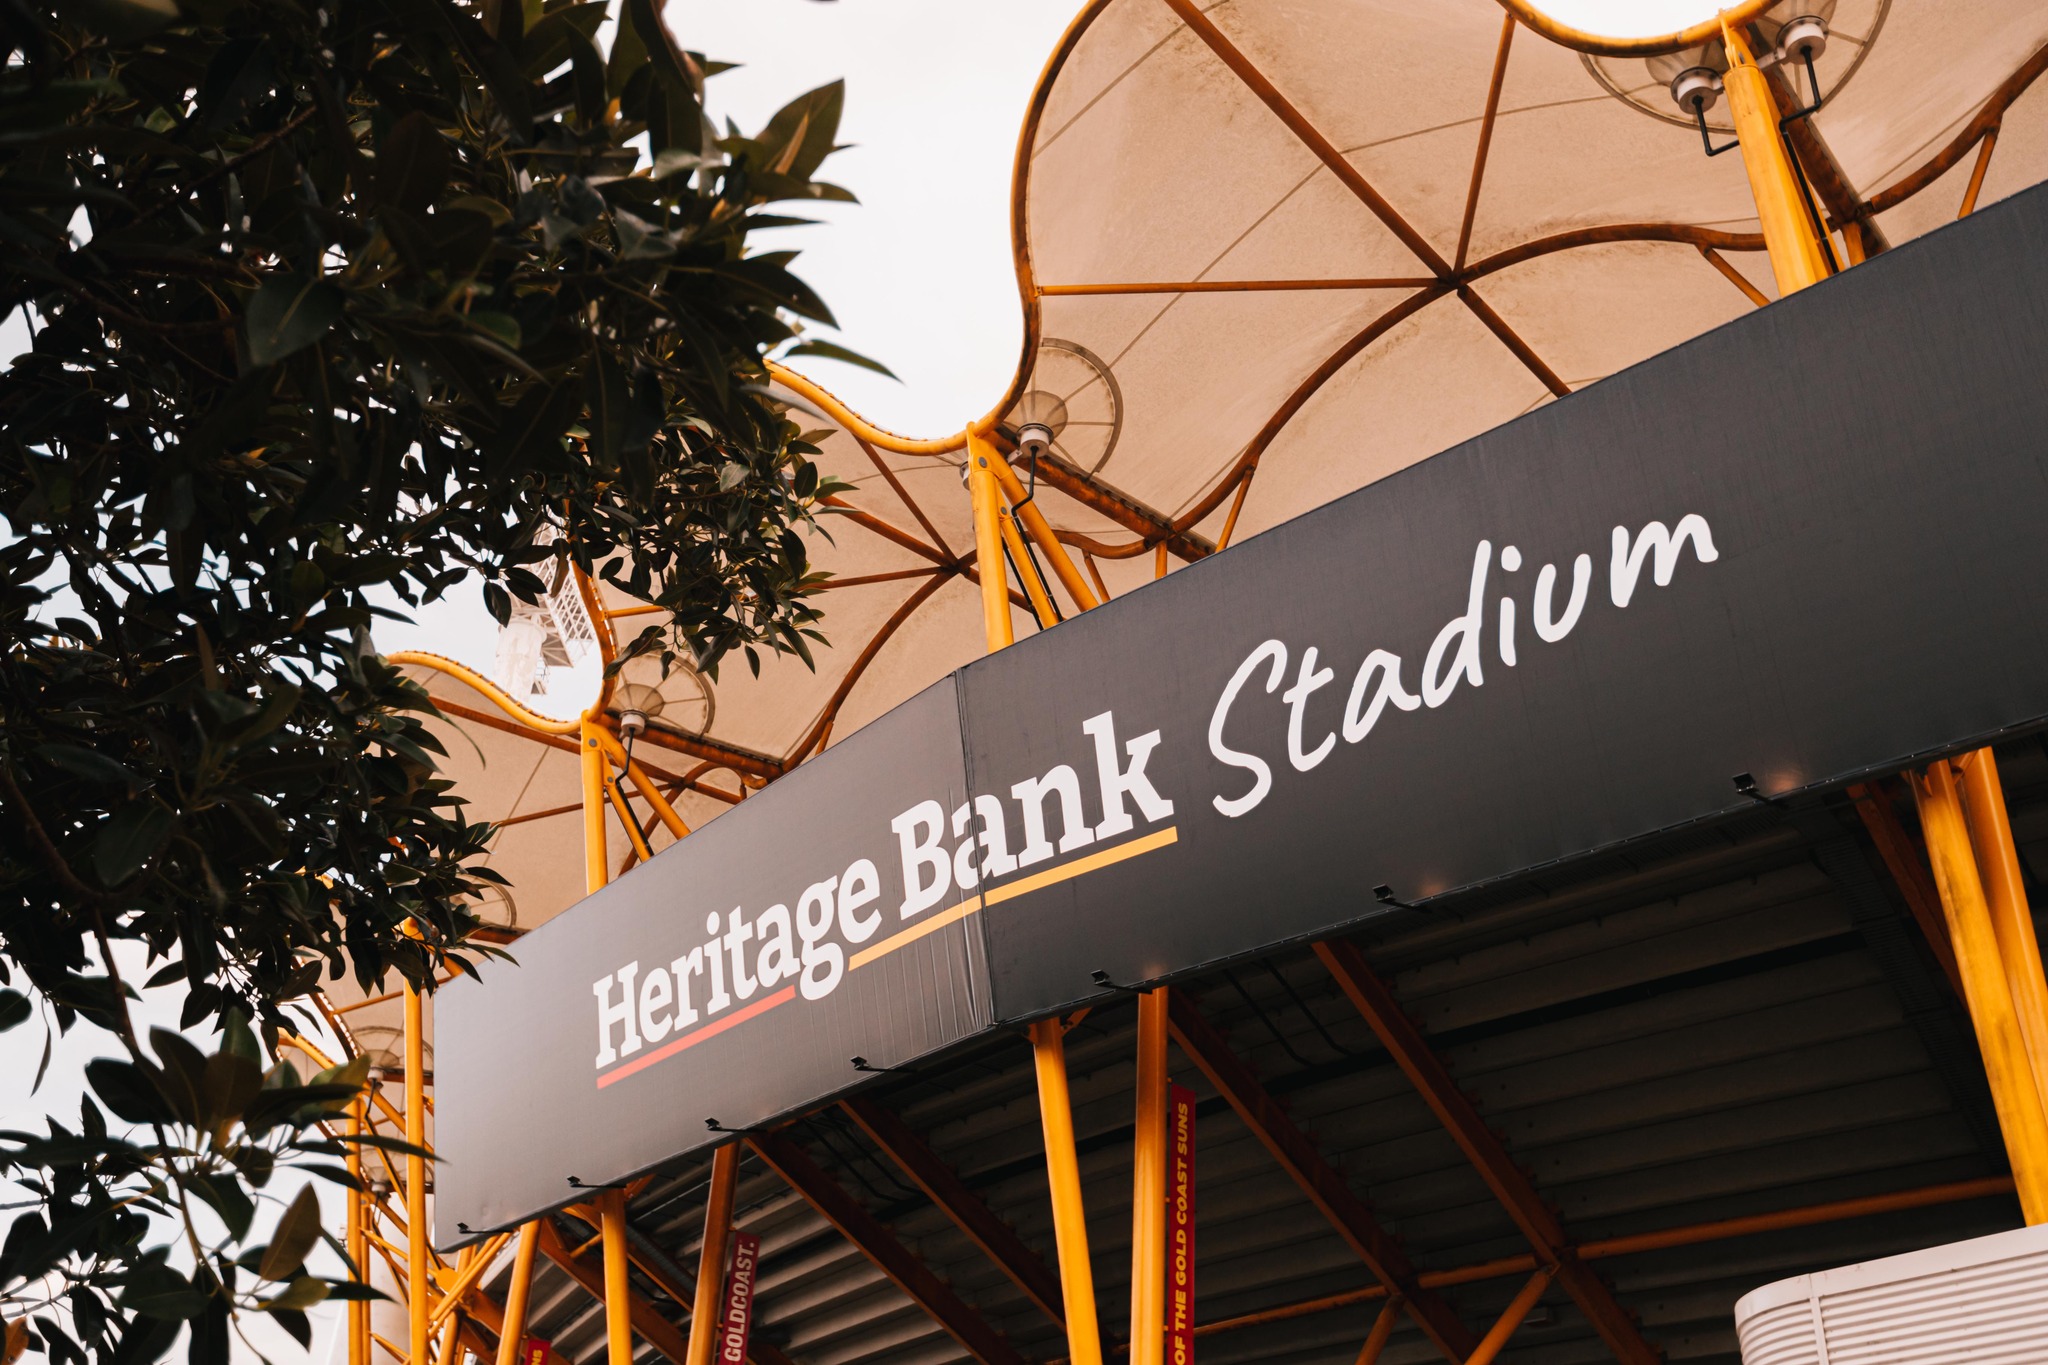 Heritage Bank Stadium